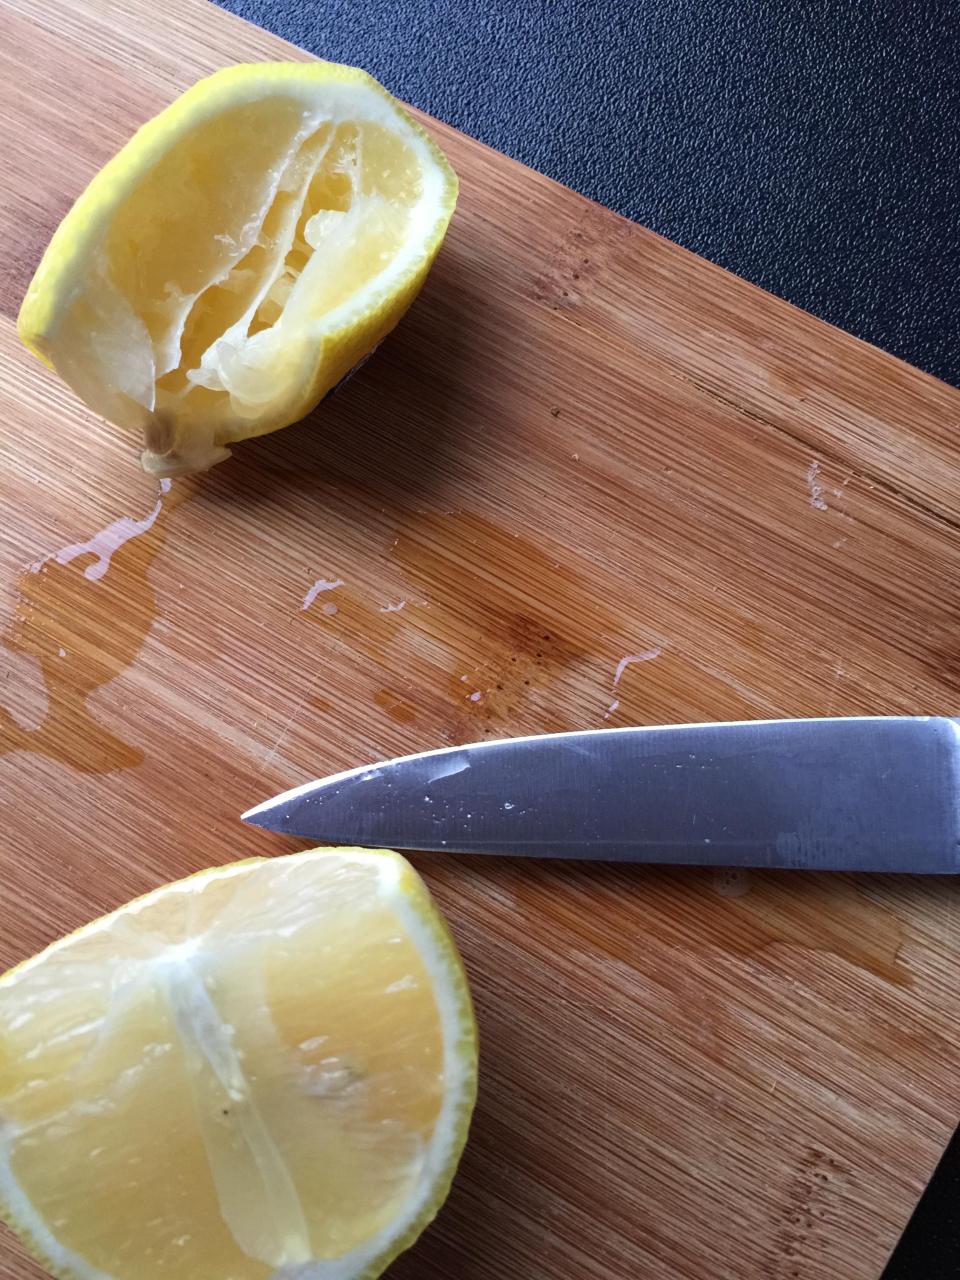 Lemons Fruits